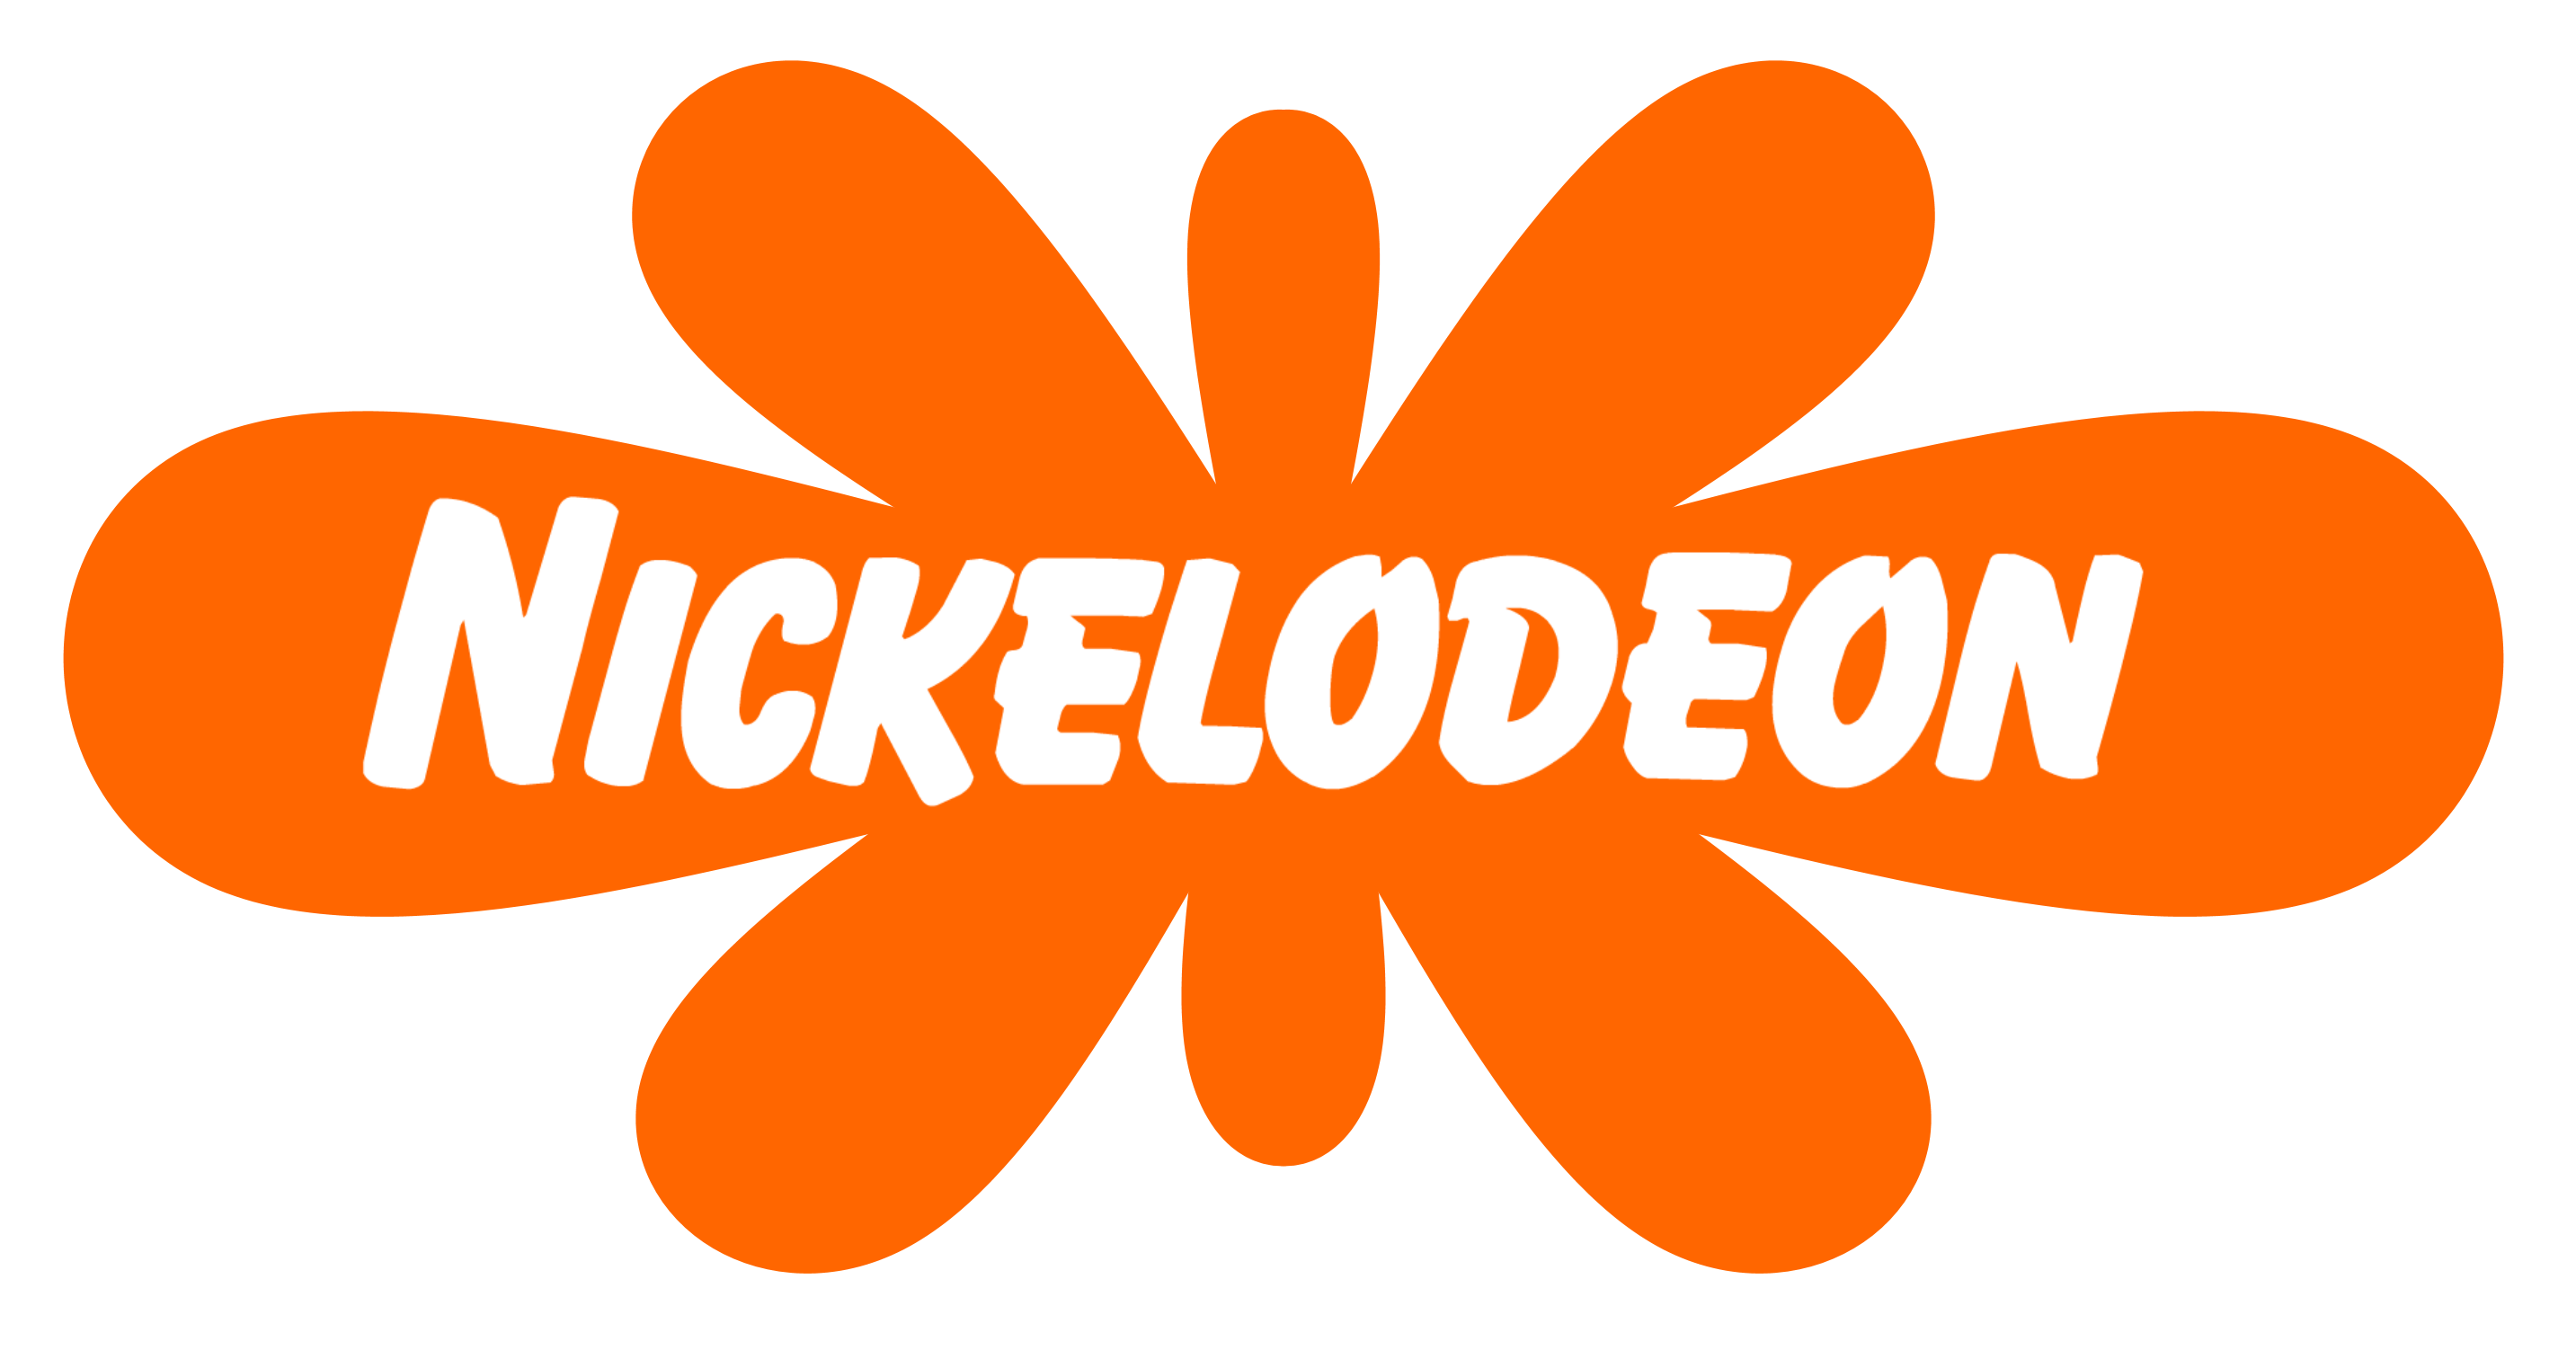 Nick channel. Логотип канала Nickelodeon. Никелодеон логотип 2000. Логотип Никелодеон 1998. Никелодеон надпись.